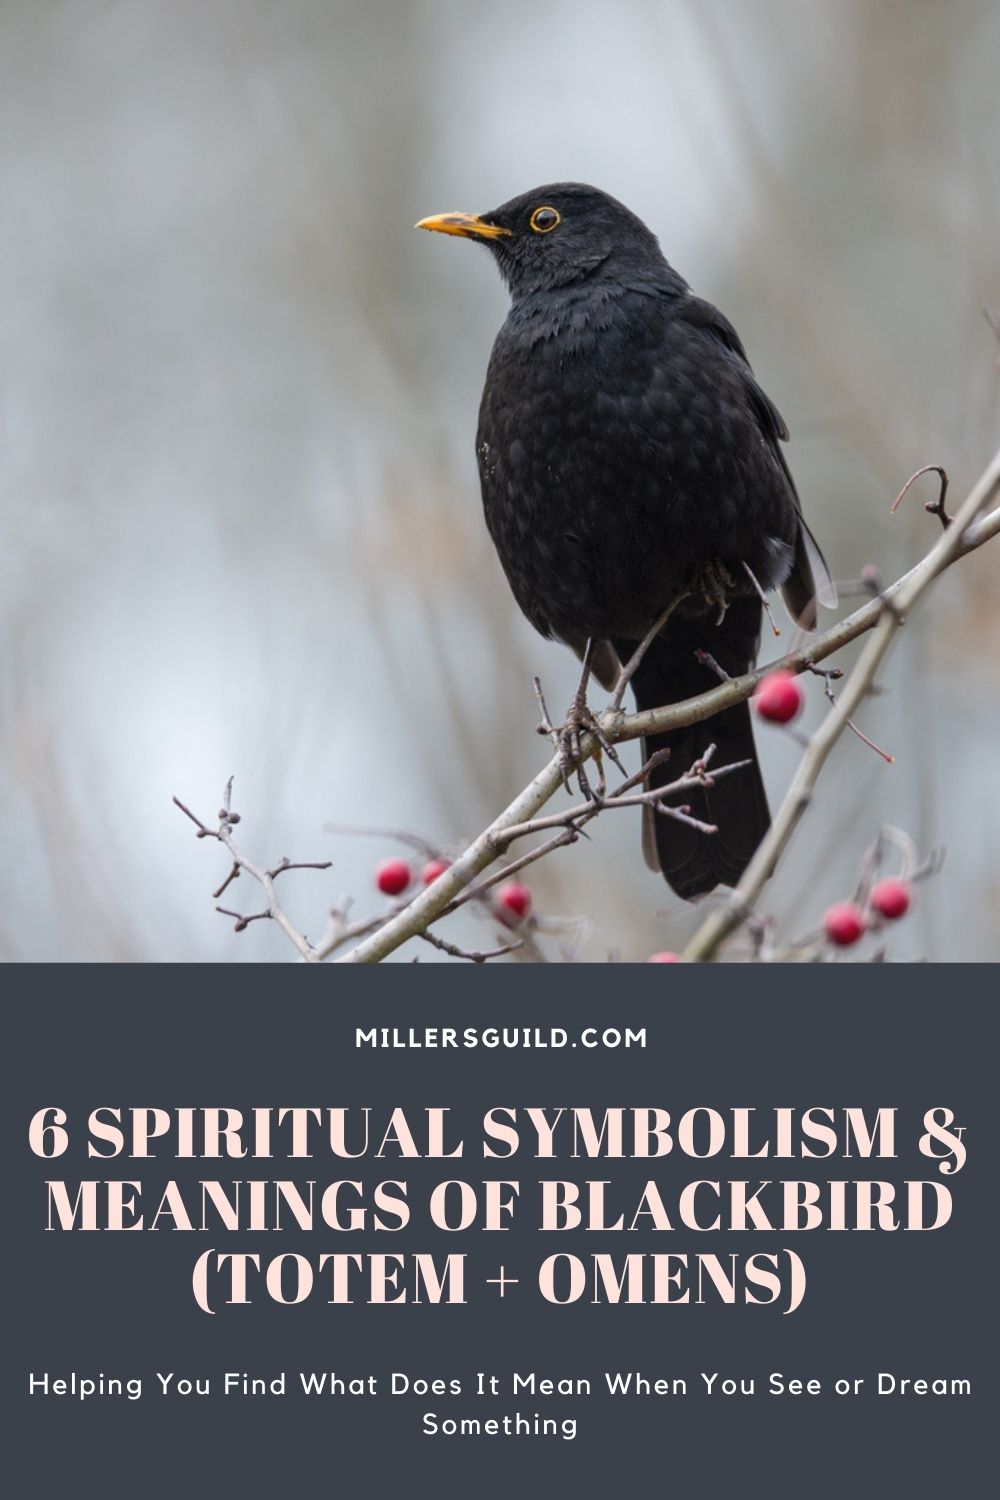 6 Spiritual Symbolism & Meanings of Blackbird (Totem + Omens) 2